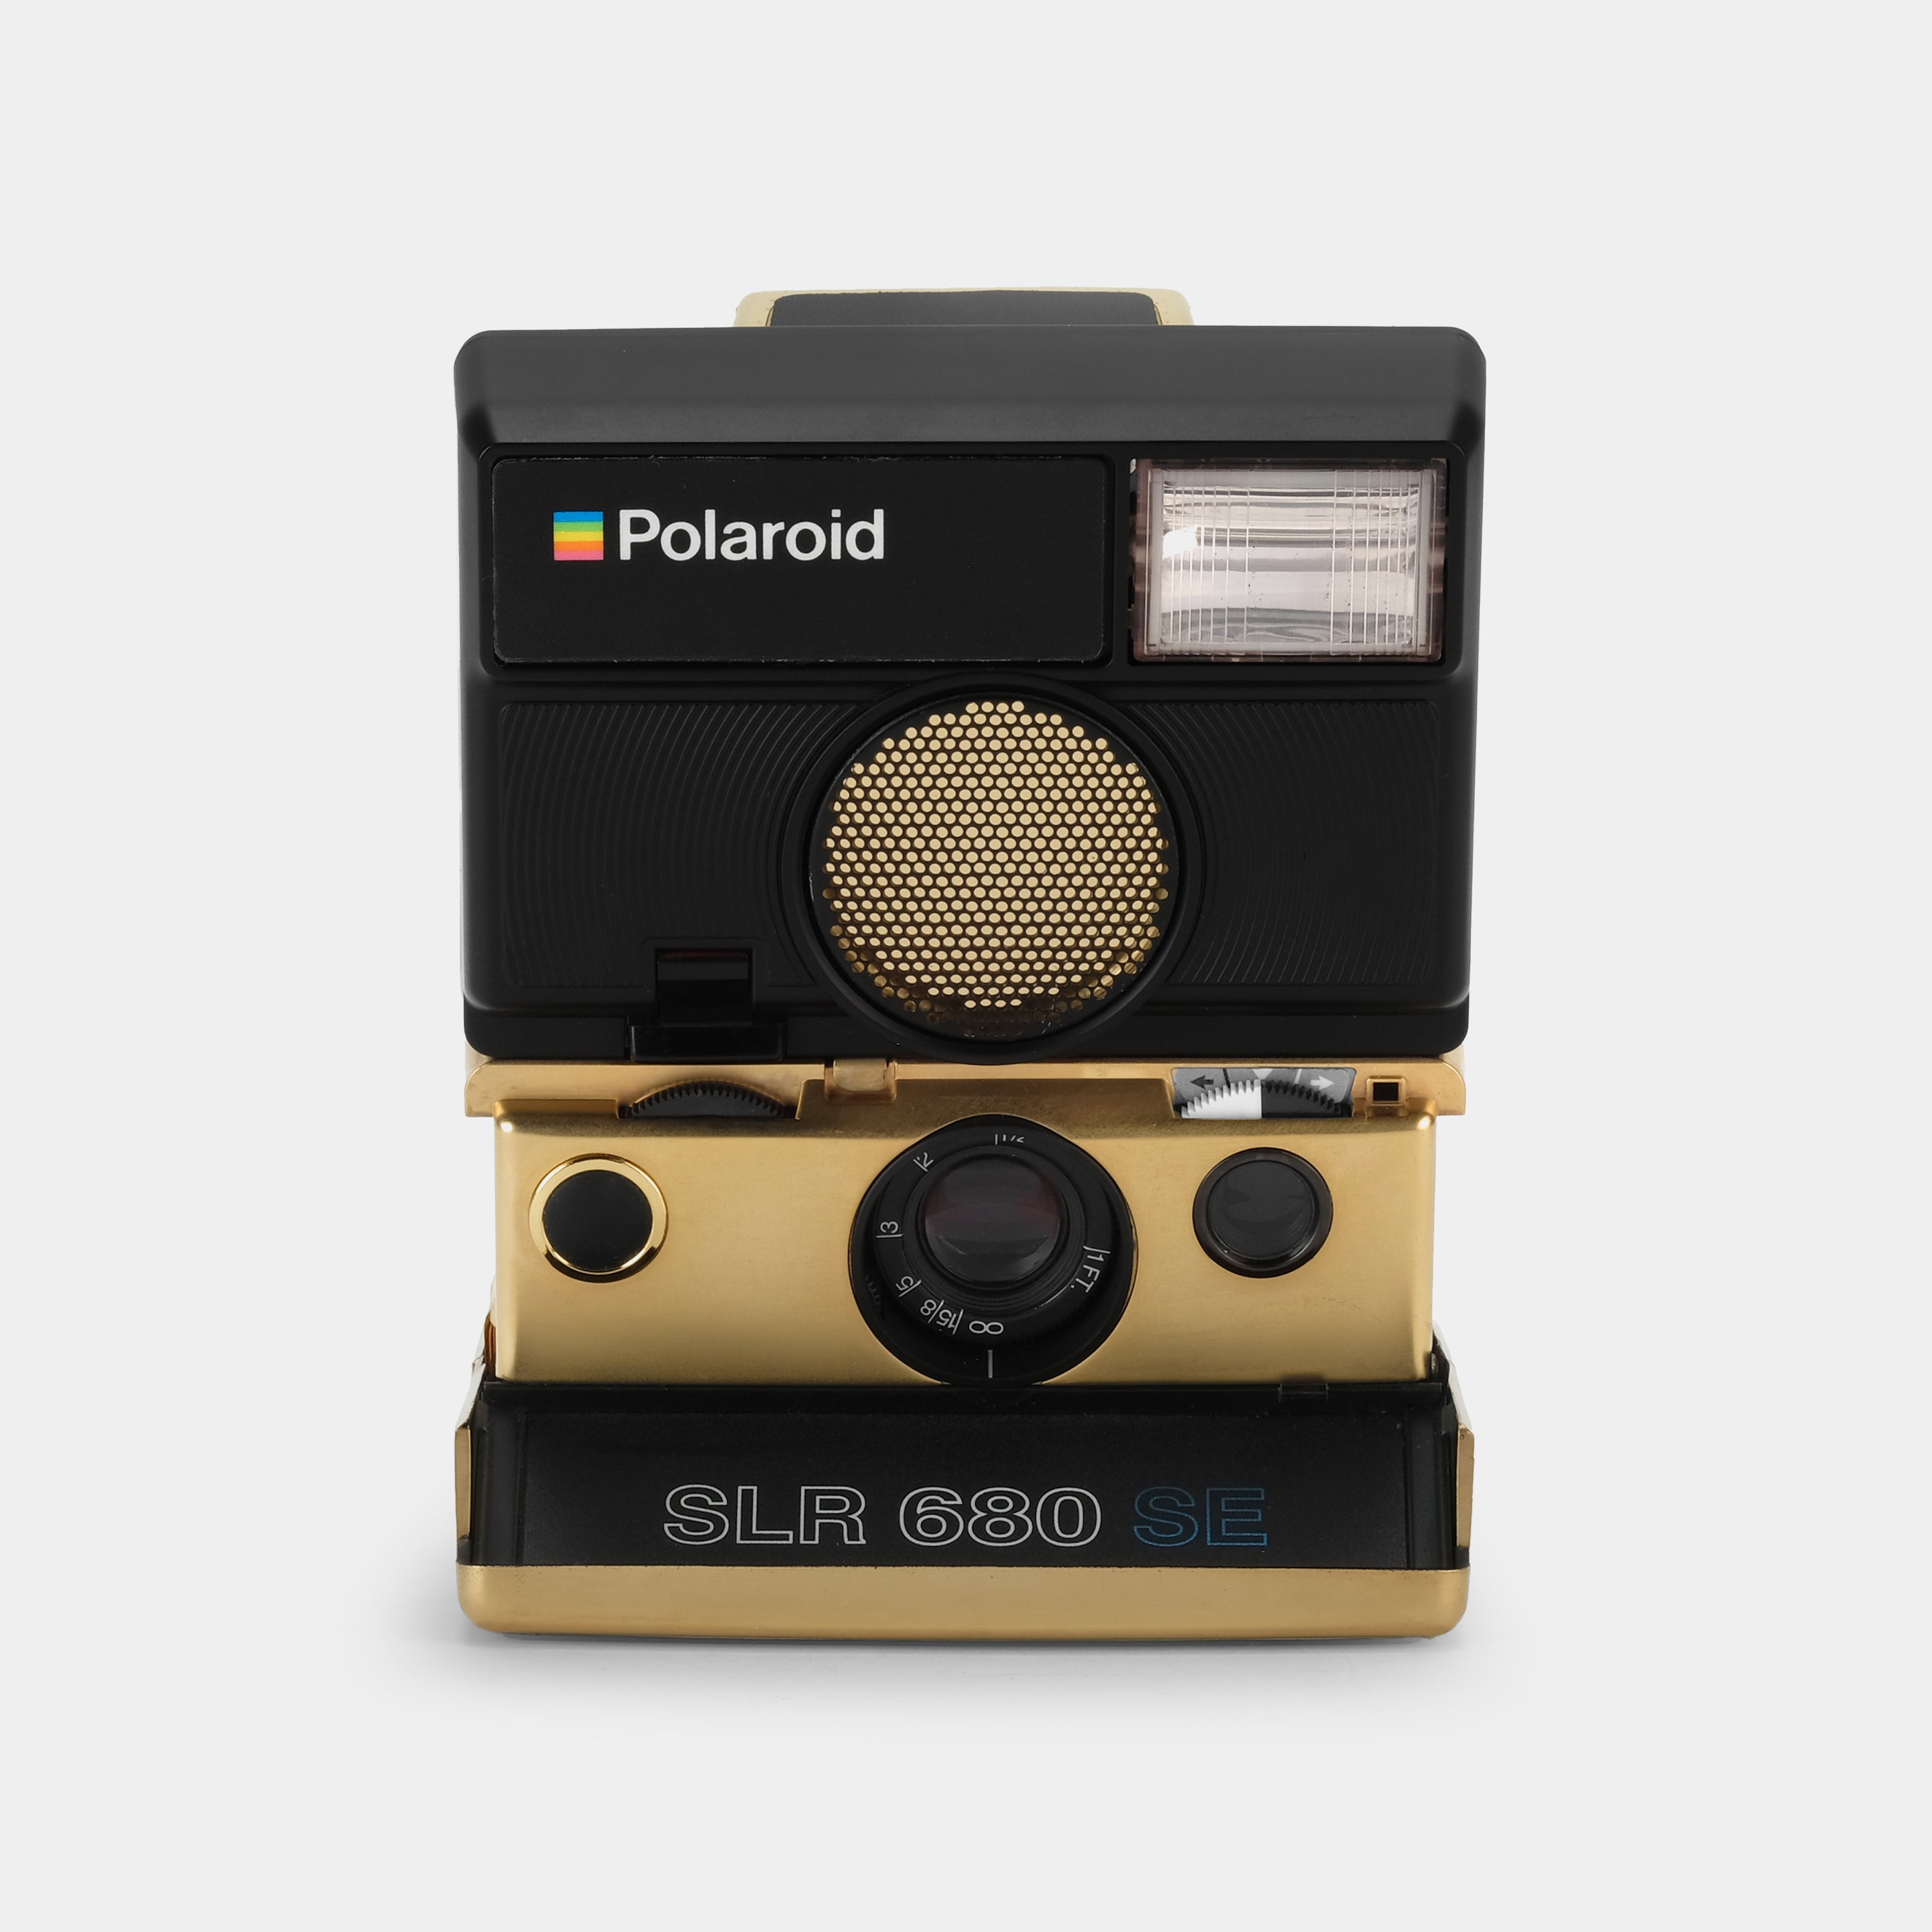 Polaroid 600 SLR 680 SE Gold Folding Instant Film Camera